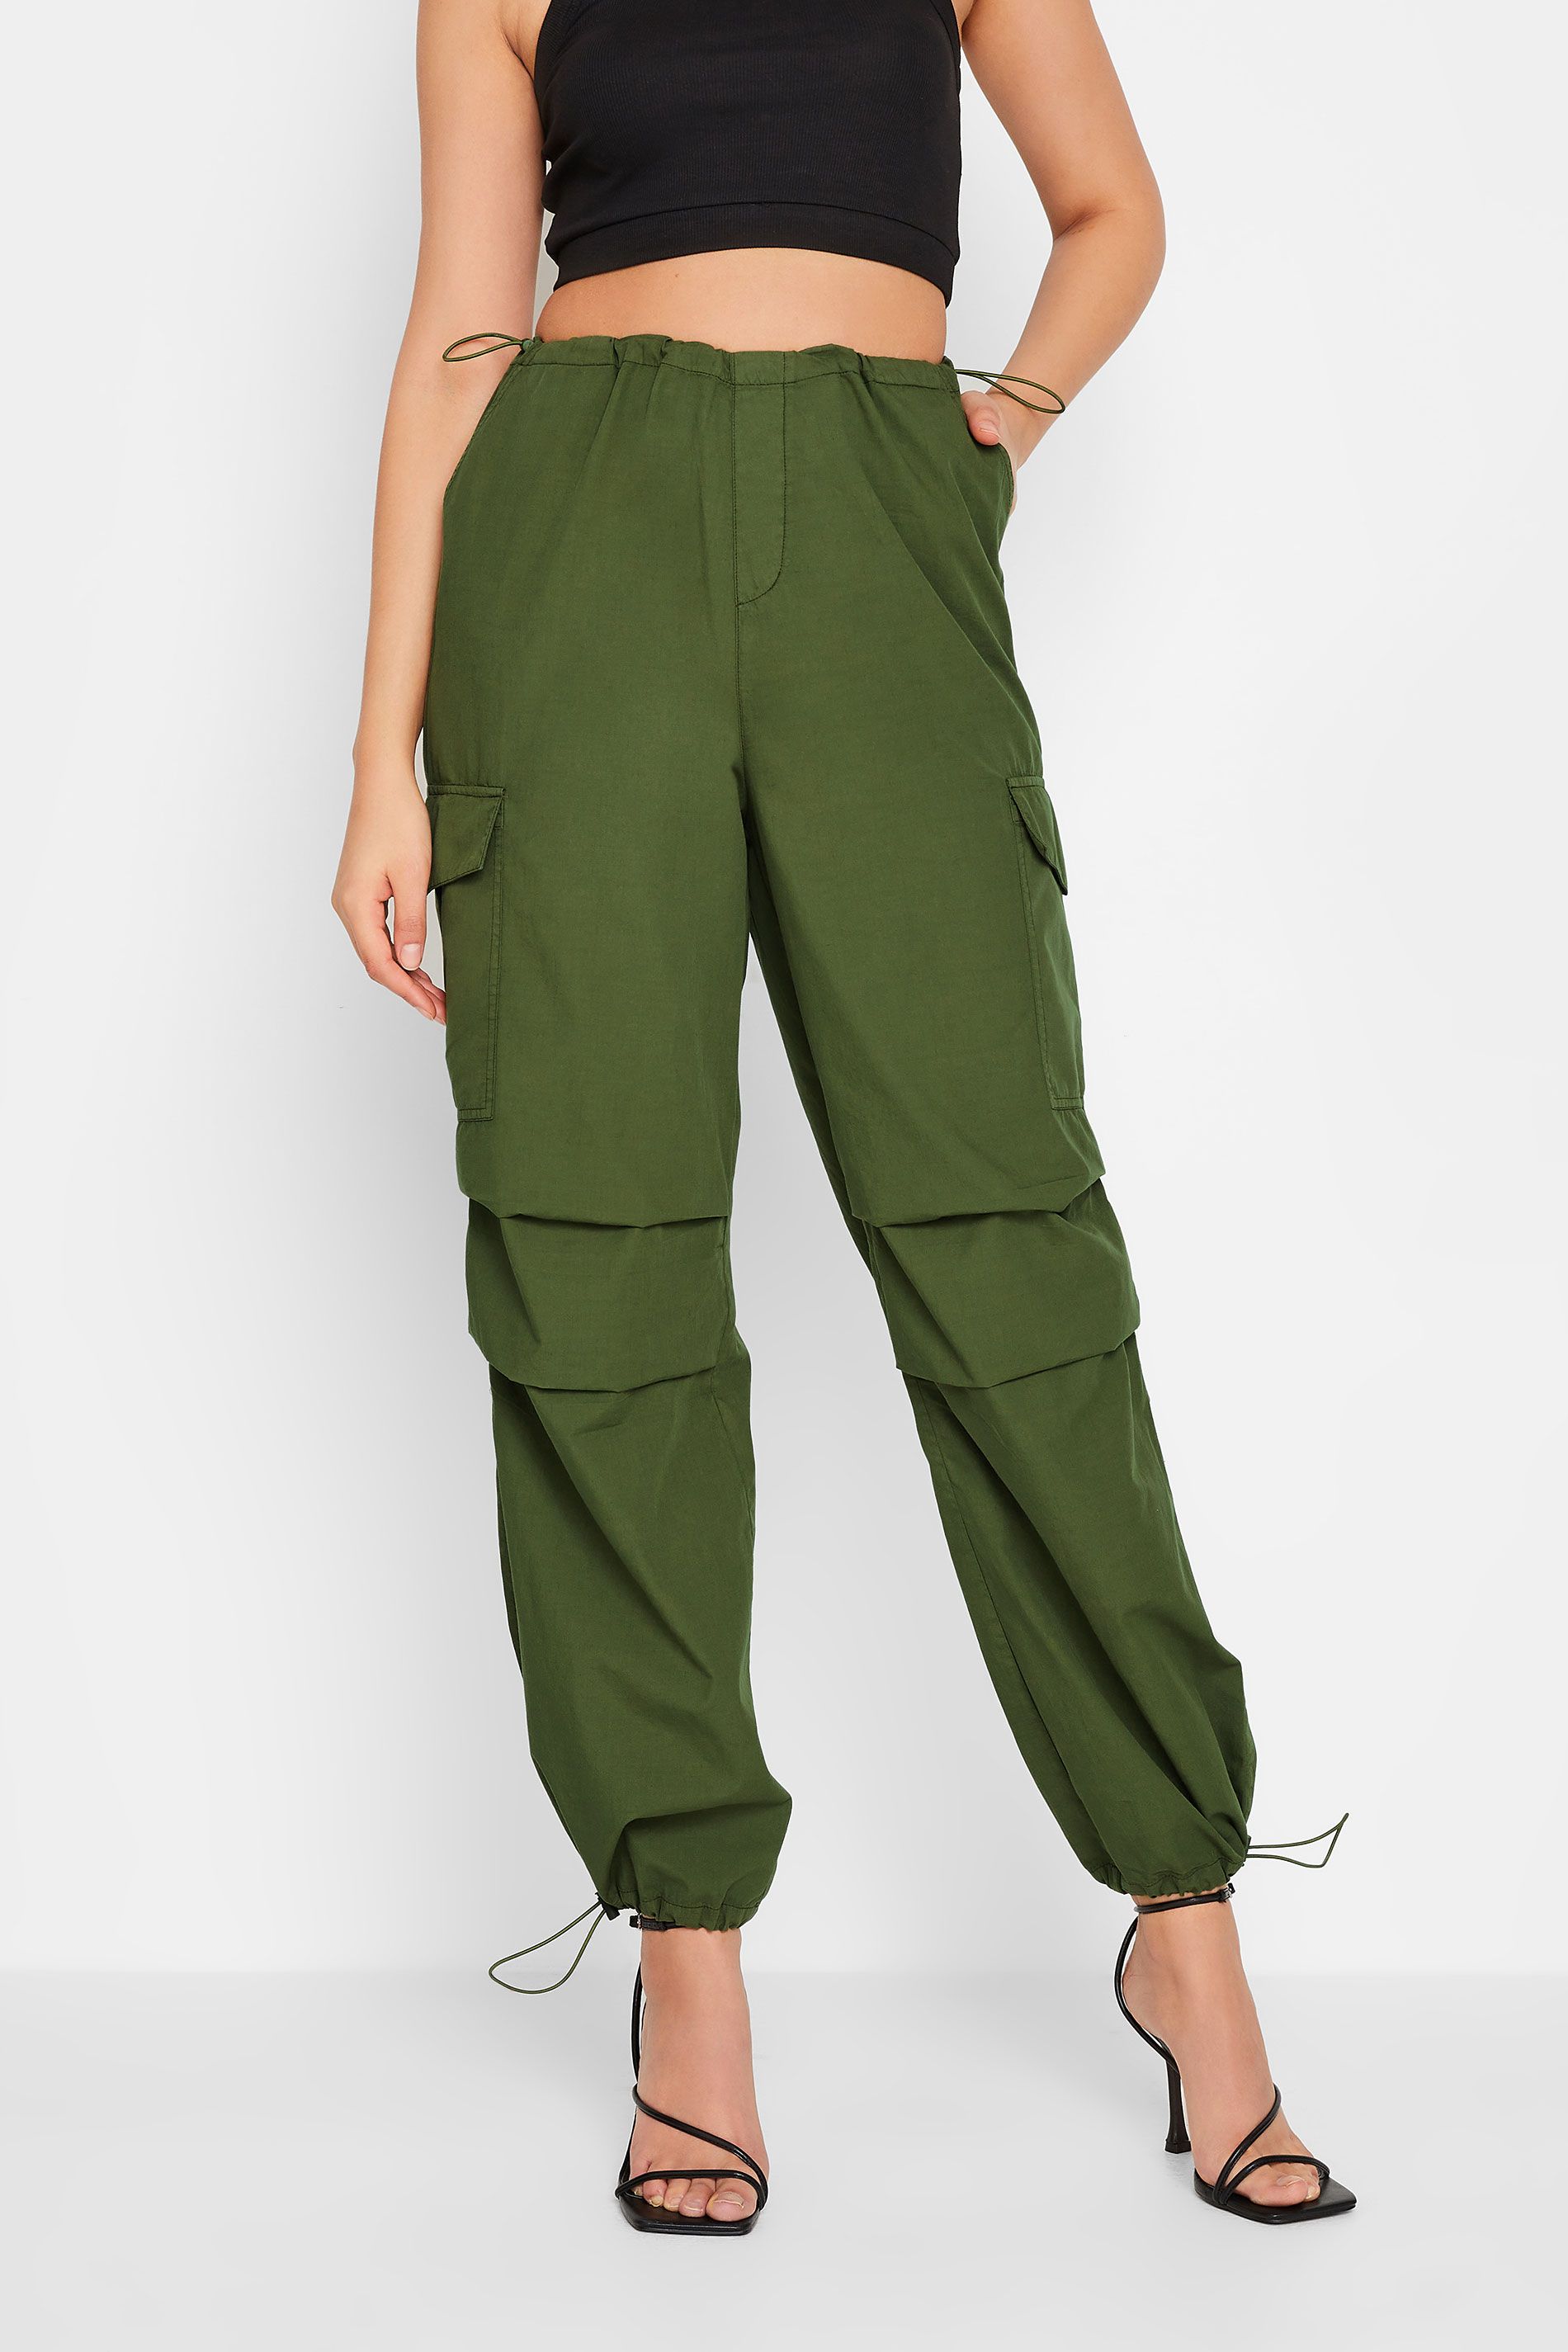 LTS Tall Khaki Green Parachute Trousers | Long Tall Sally